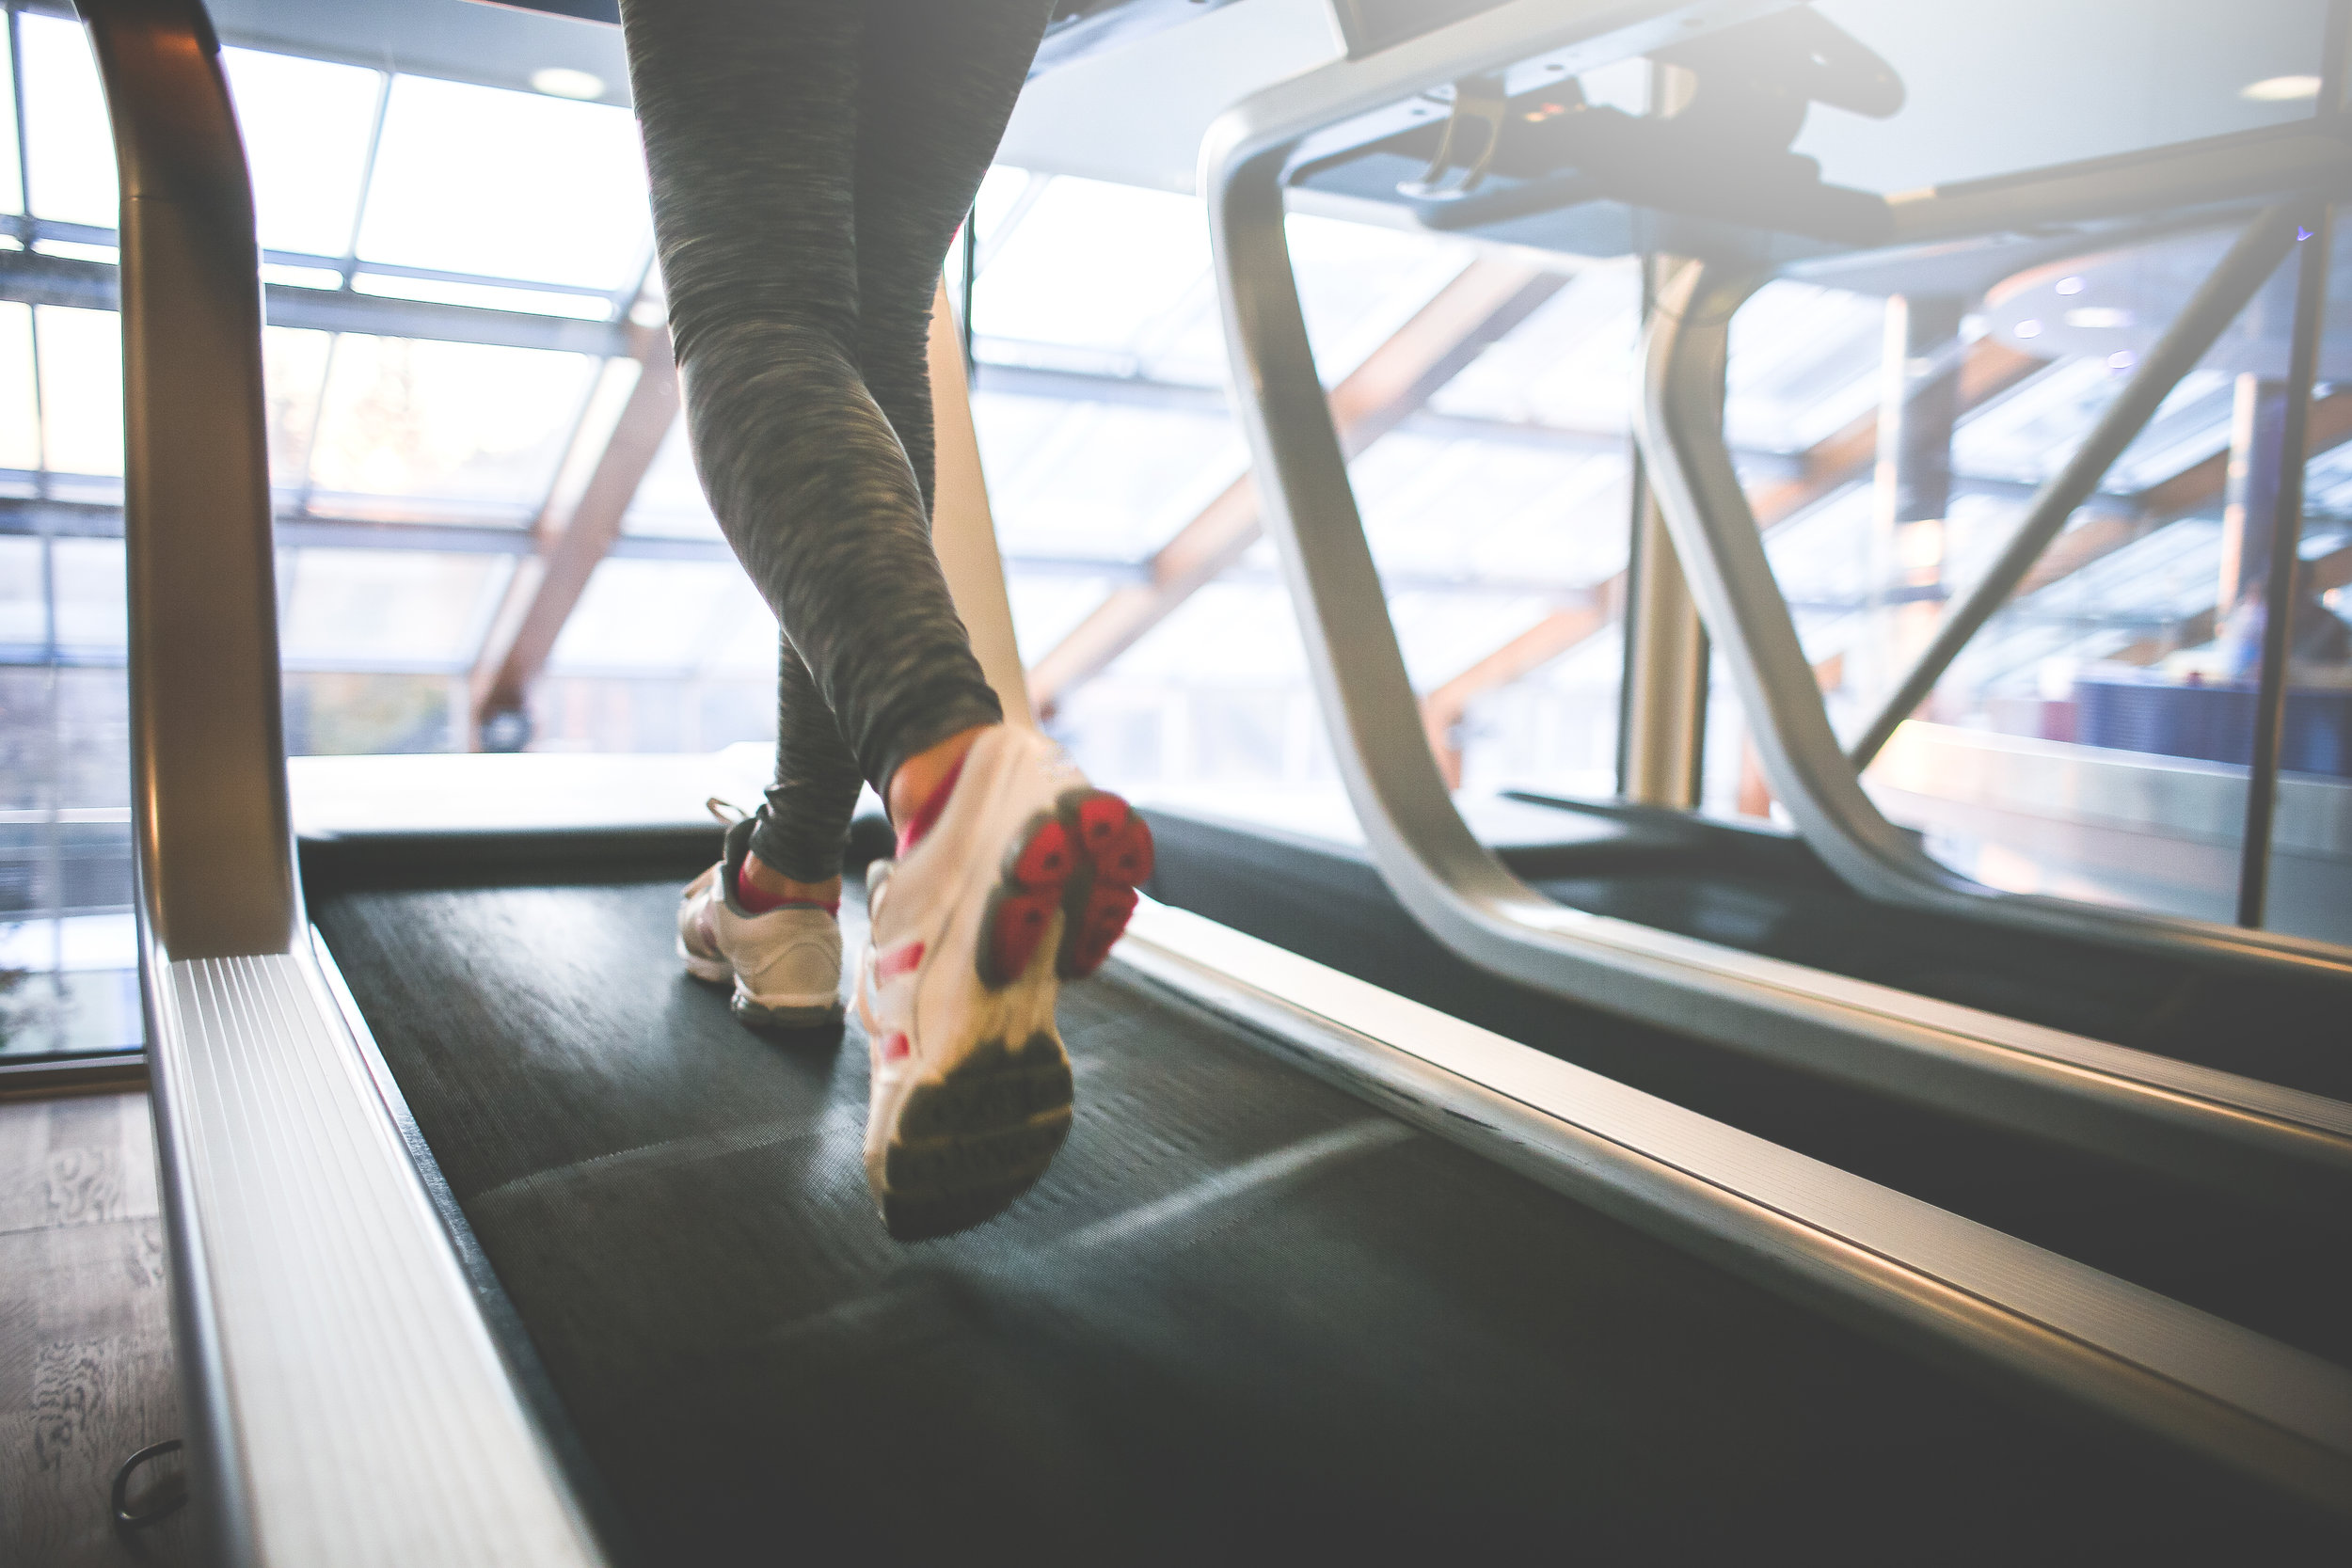 cardio-running-on-a-treadmill-picjumbo-com.jpg